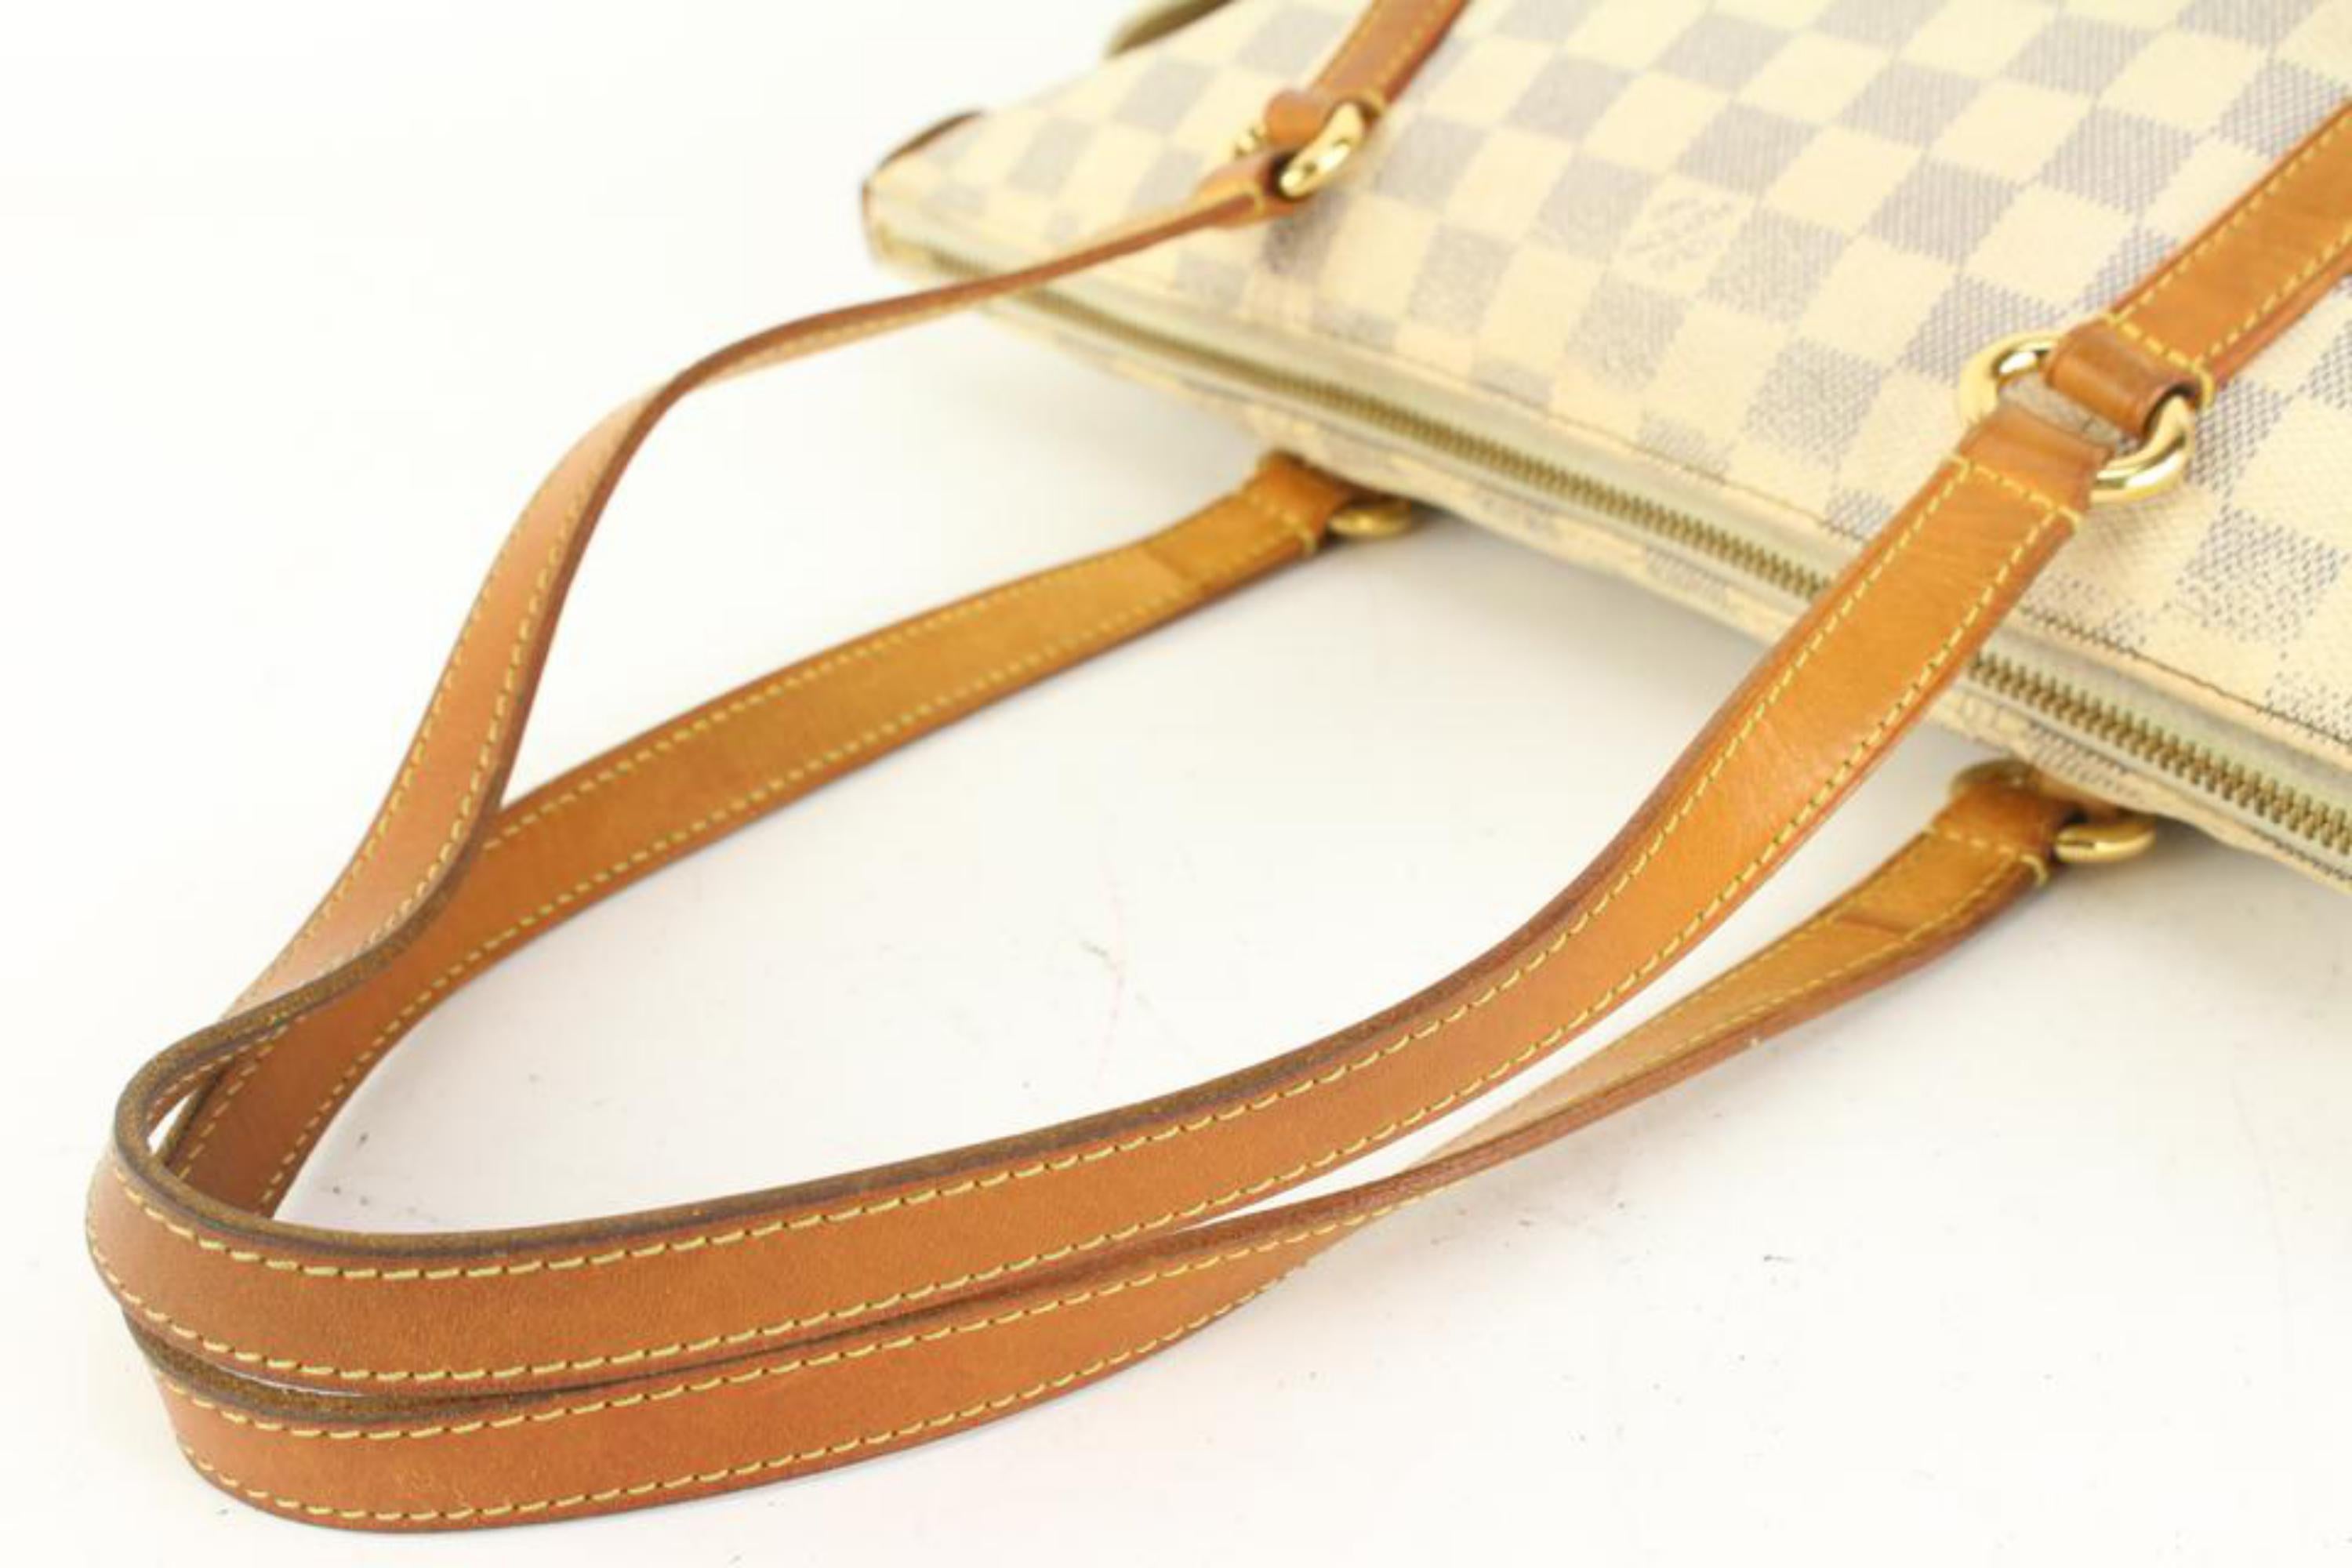 Louis Vuitton Damier Azur Canvas and Leather Totally PM Bag Louis Vuitton